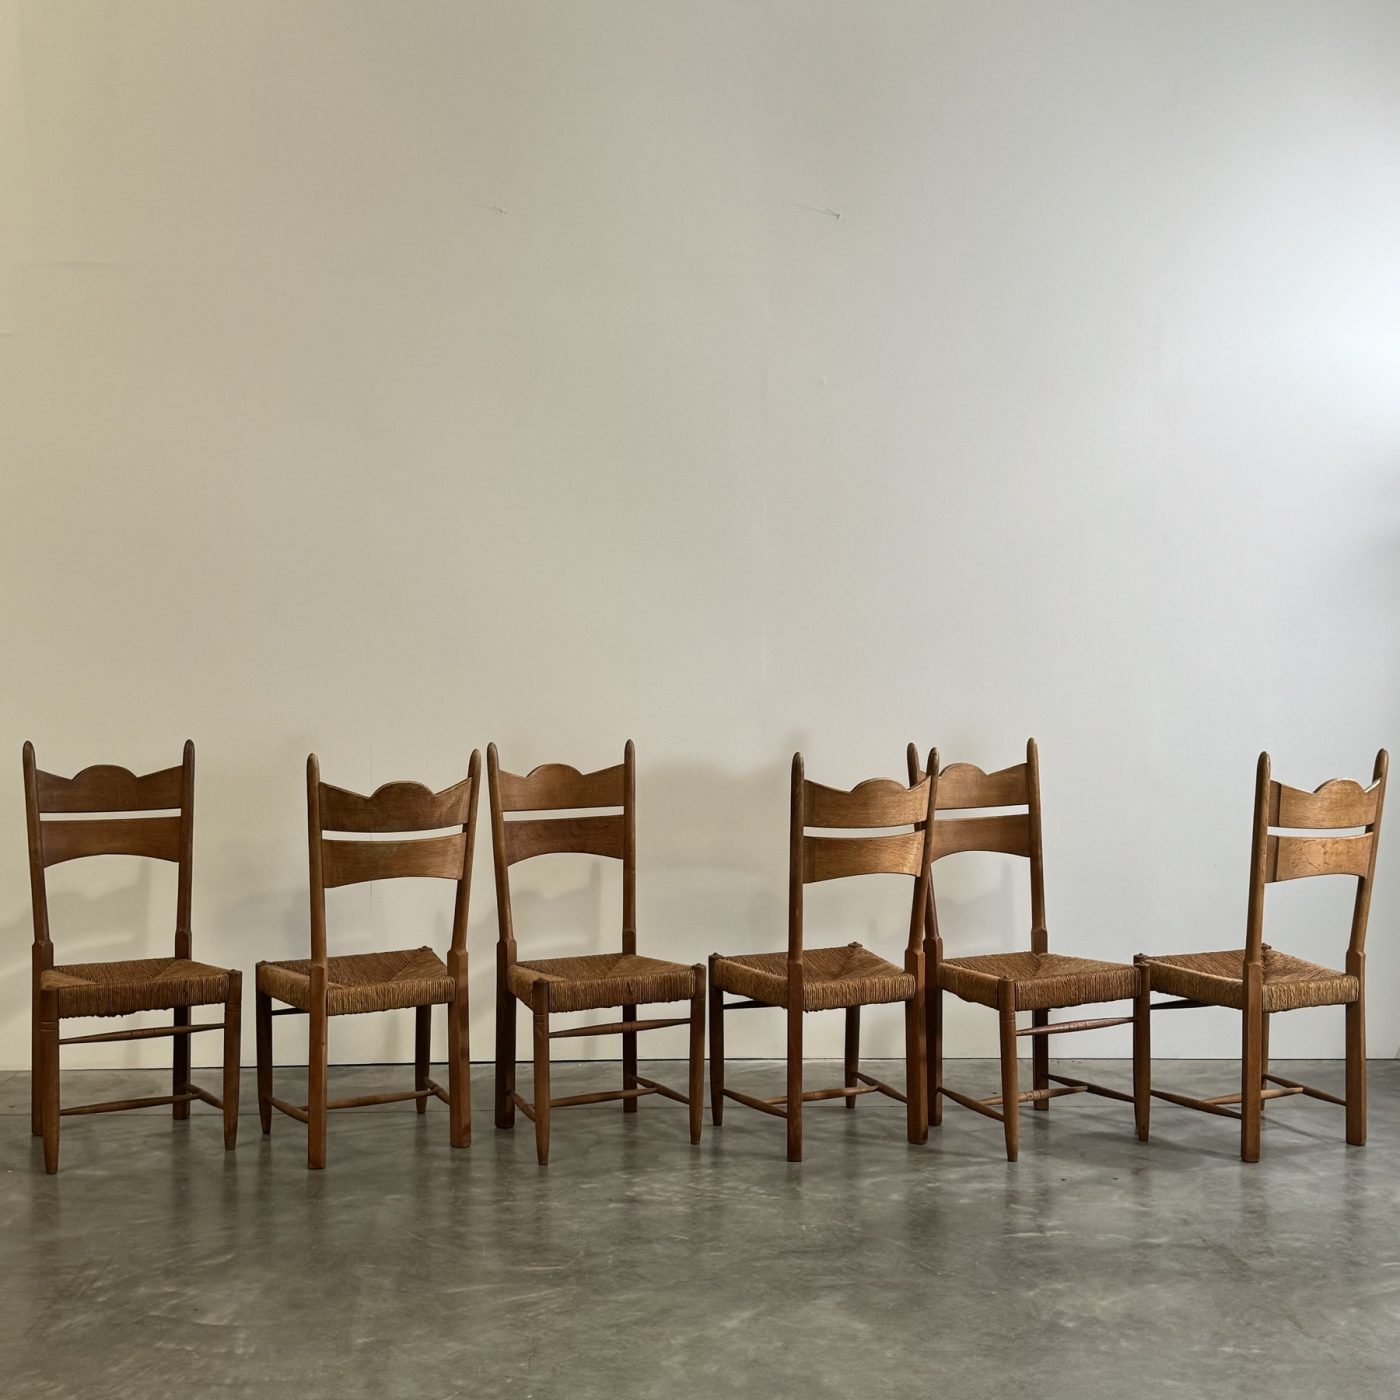 objet-vagabond-rustic-chairs0014